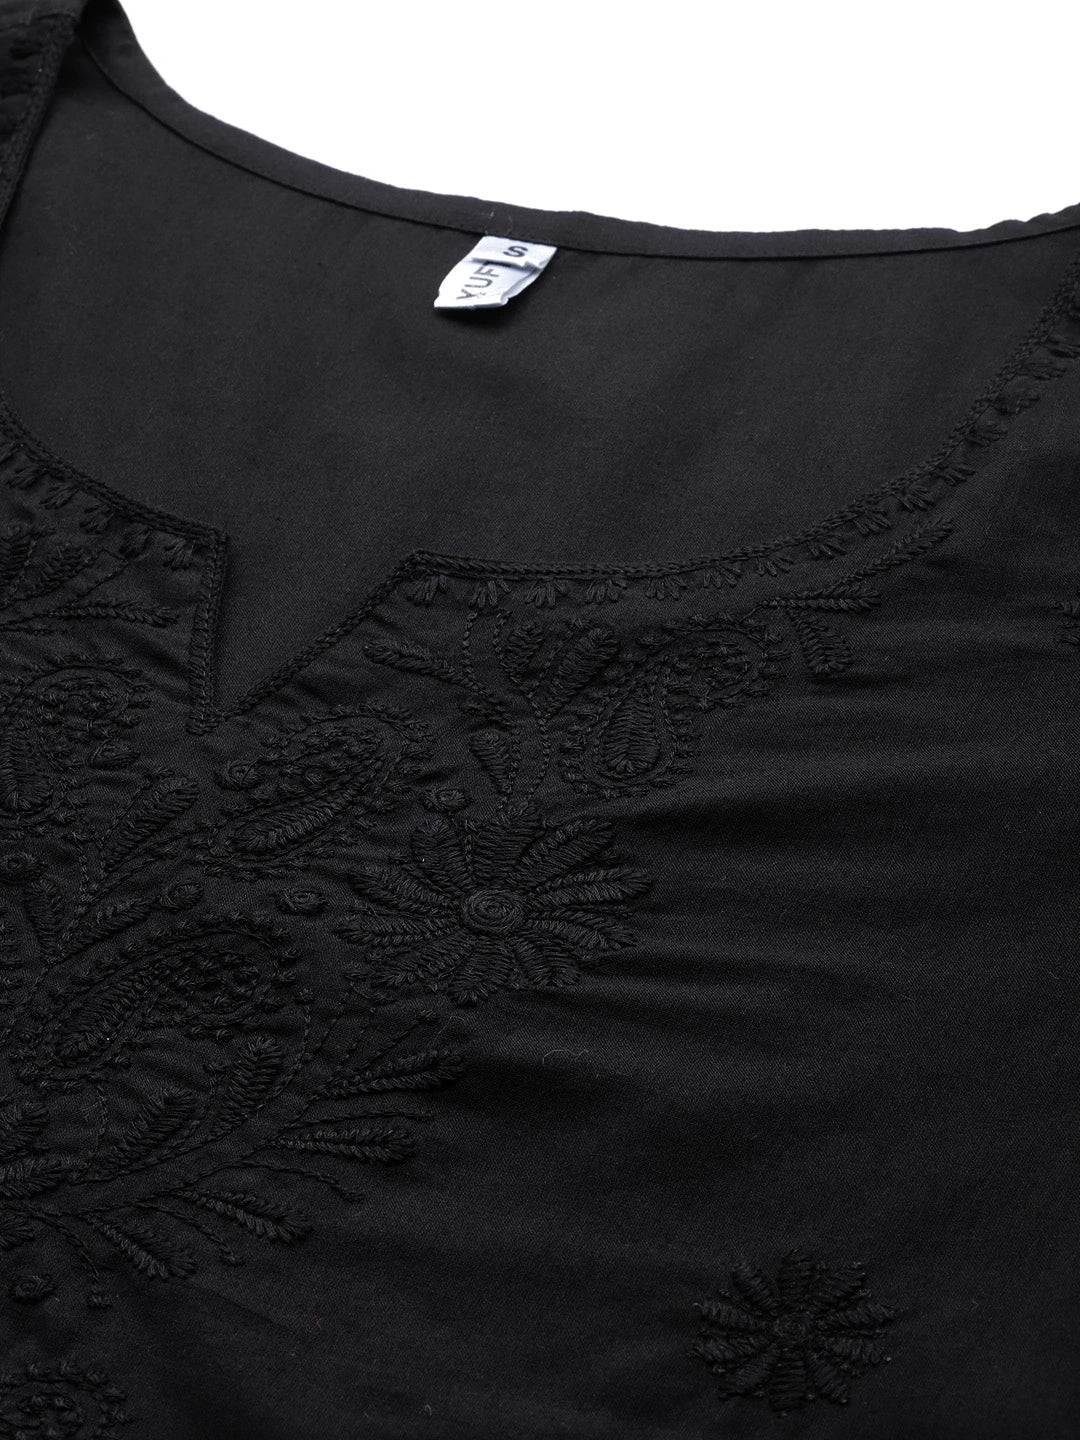 Black Floral Chikankari Embroidered Pure Cotton Top-Yufta Store-1861TOPBKS